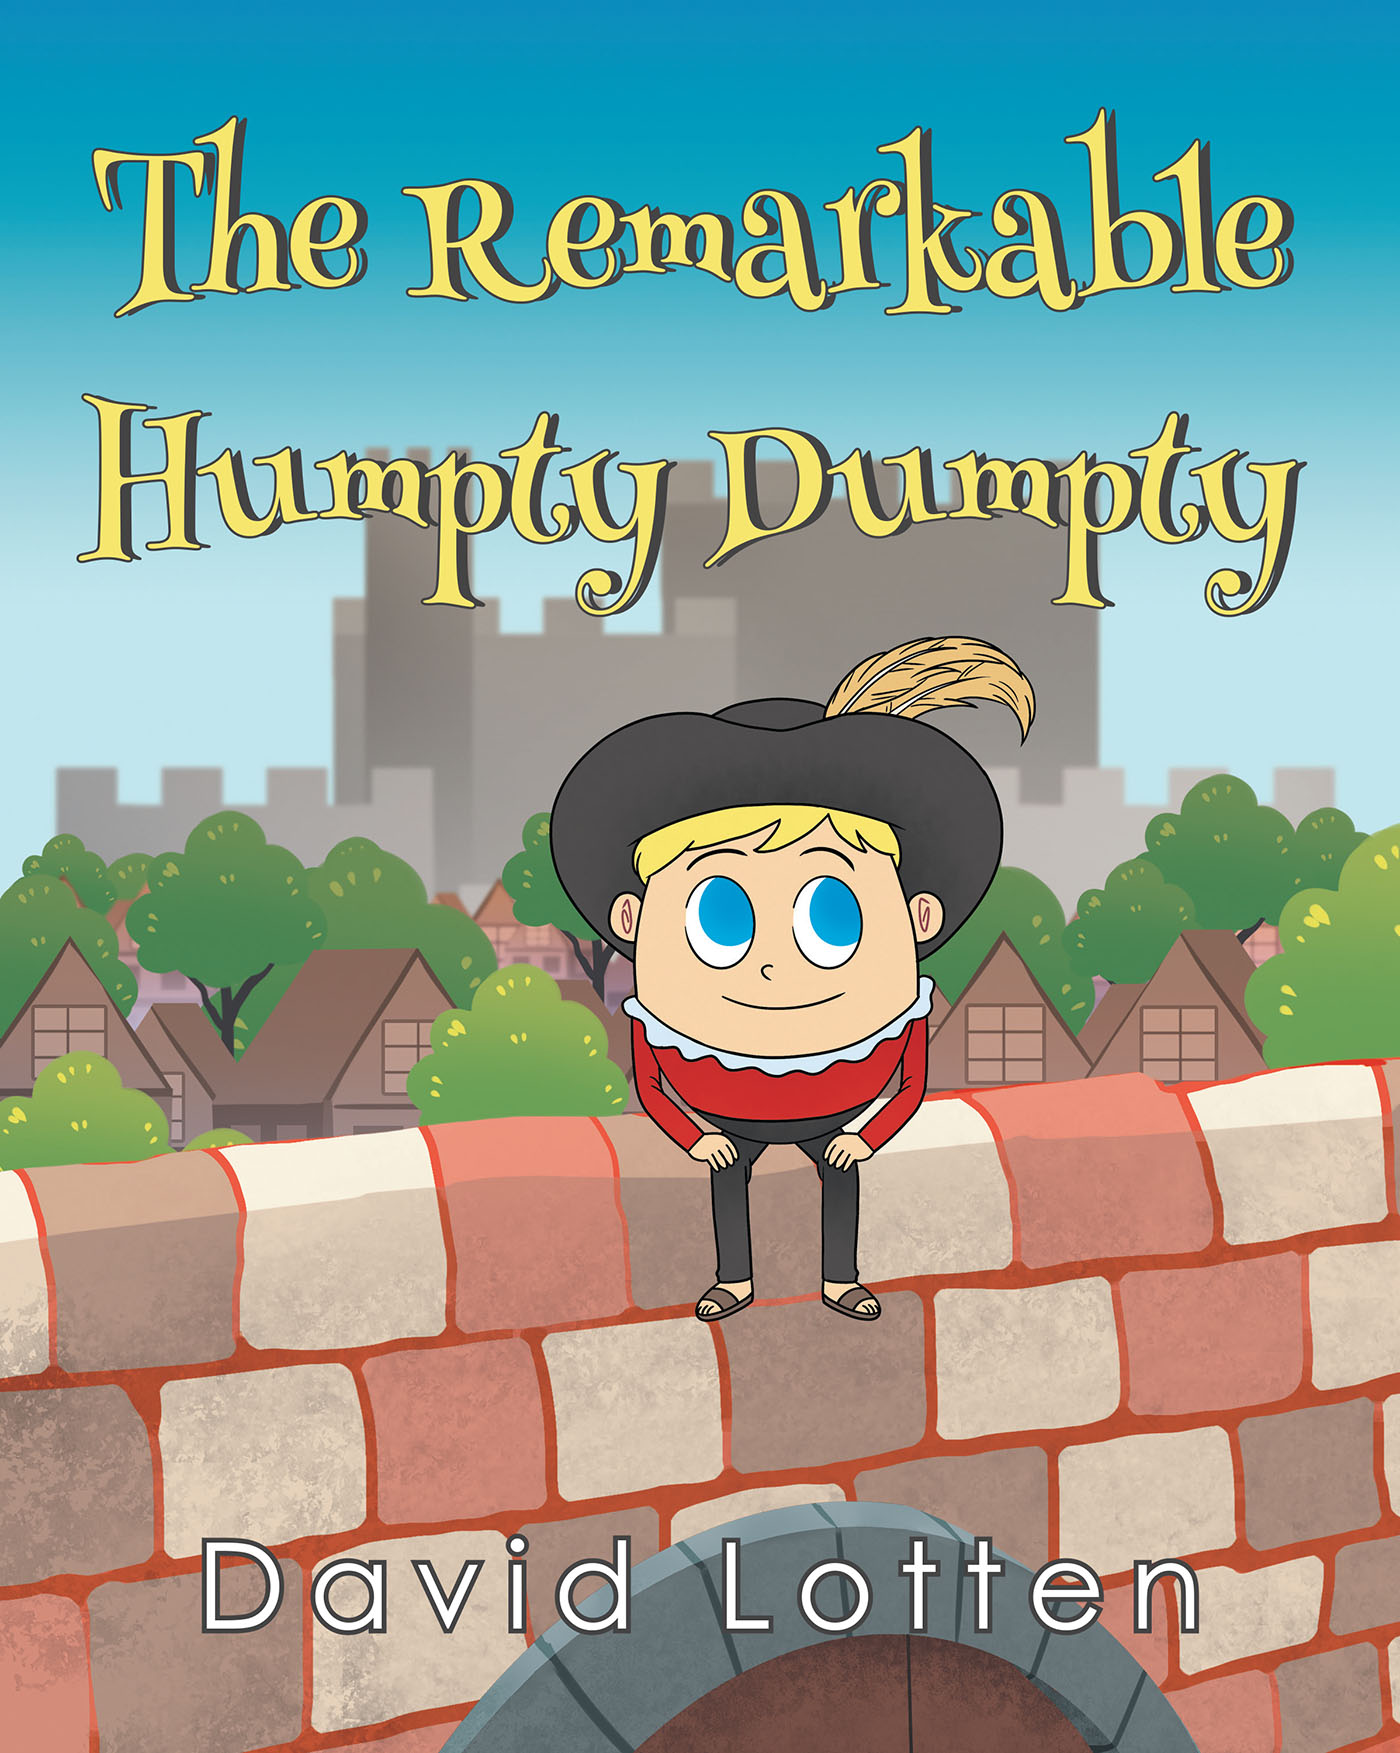 David Lotten’s Newly Released "The Remarkable Humpty Dumpty" is an Enjoyable Reimagining of a Familiar Nursery Rhyme